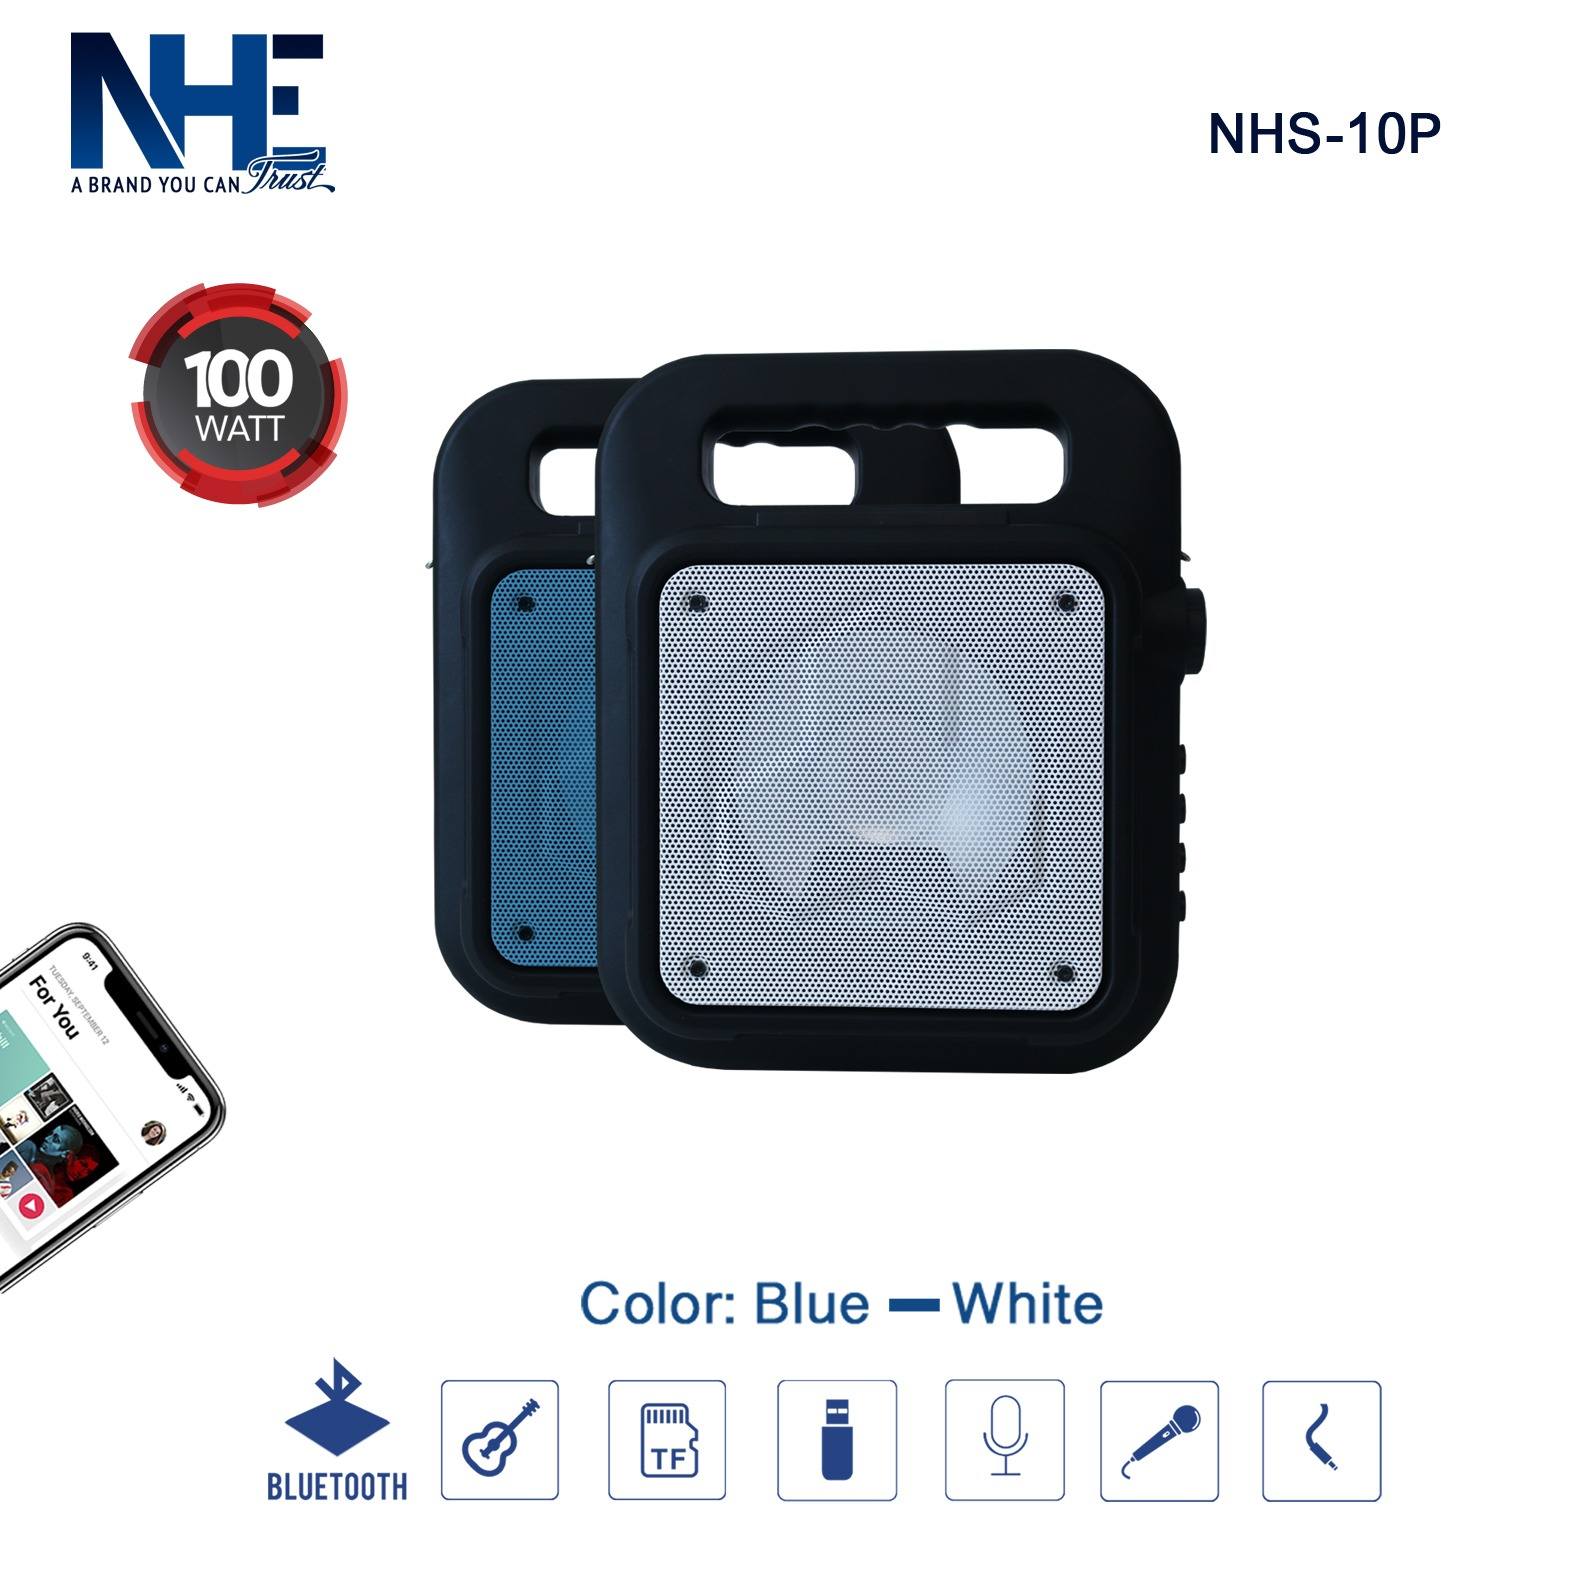 NHE Bluetooth Speaker NHS-10P